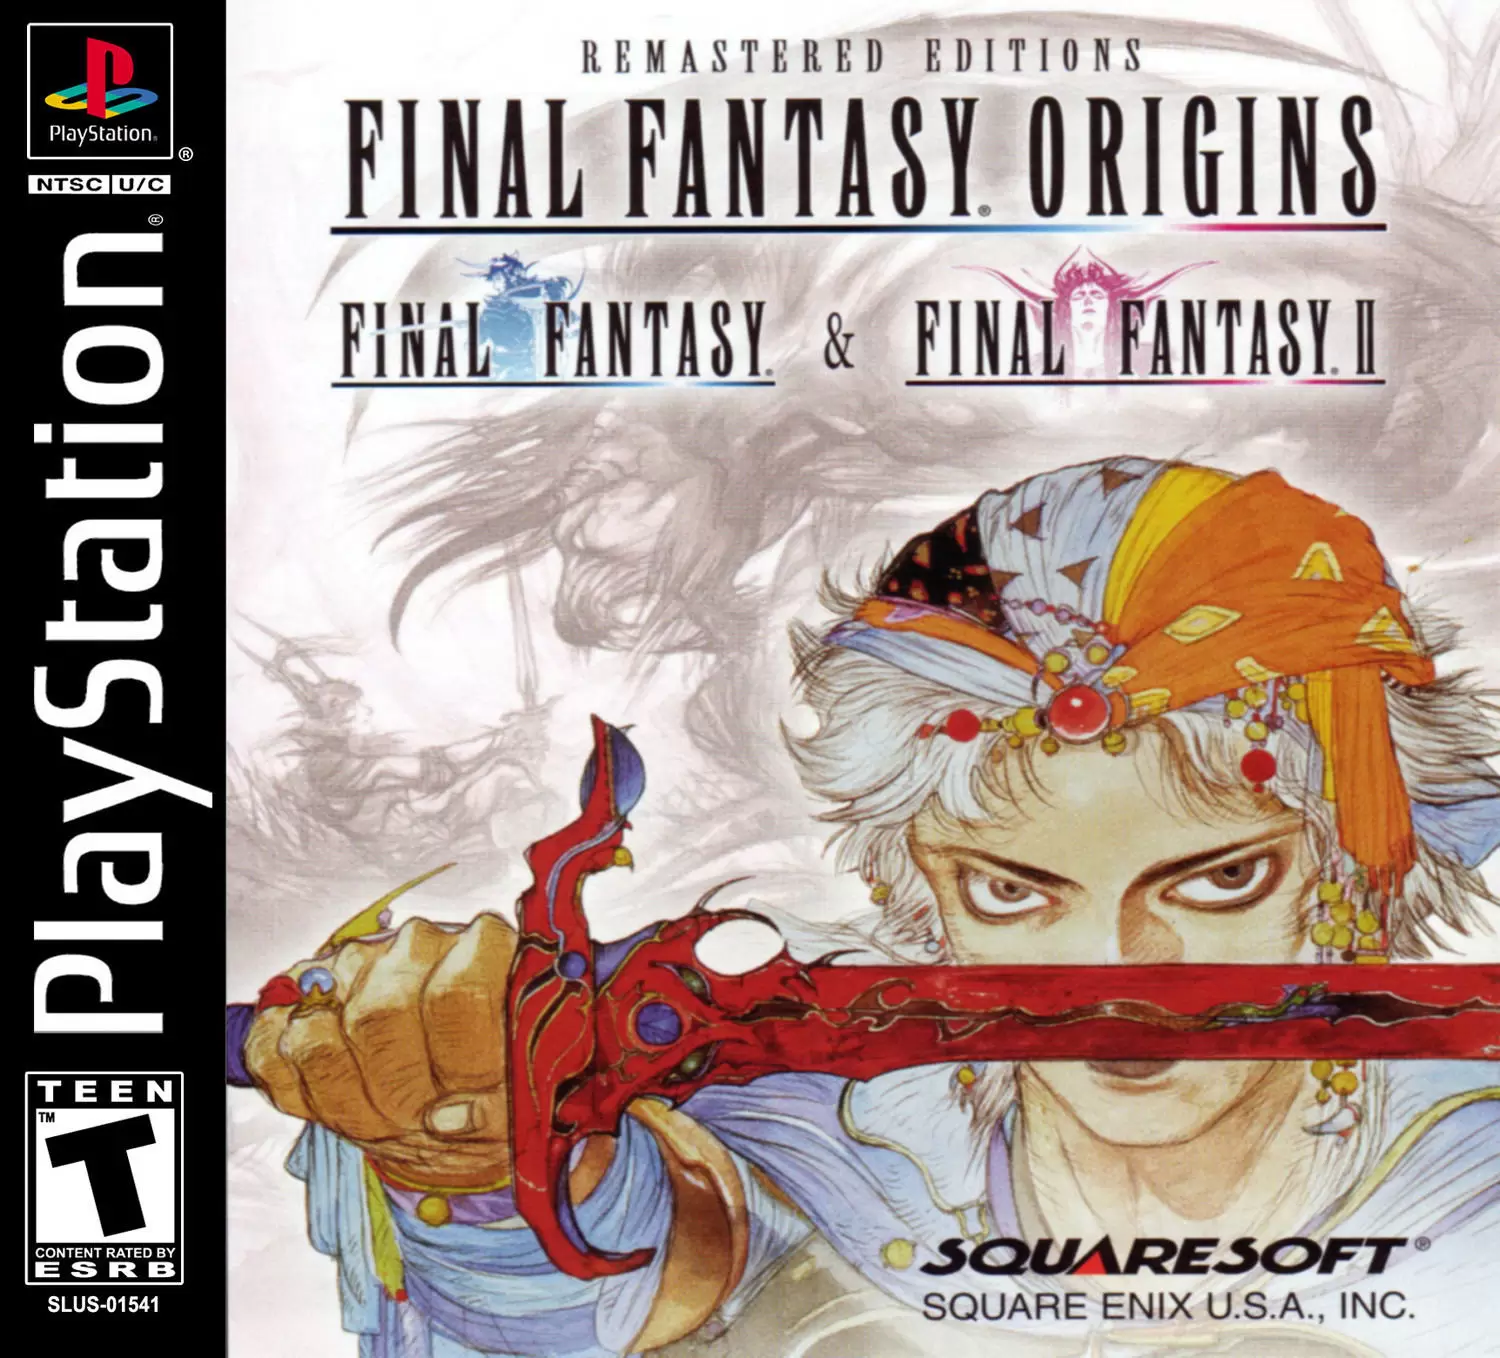 Playstation games - Final Fantasy Origins